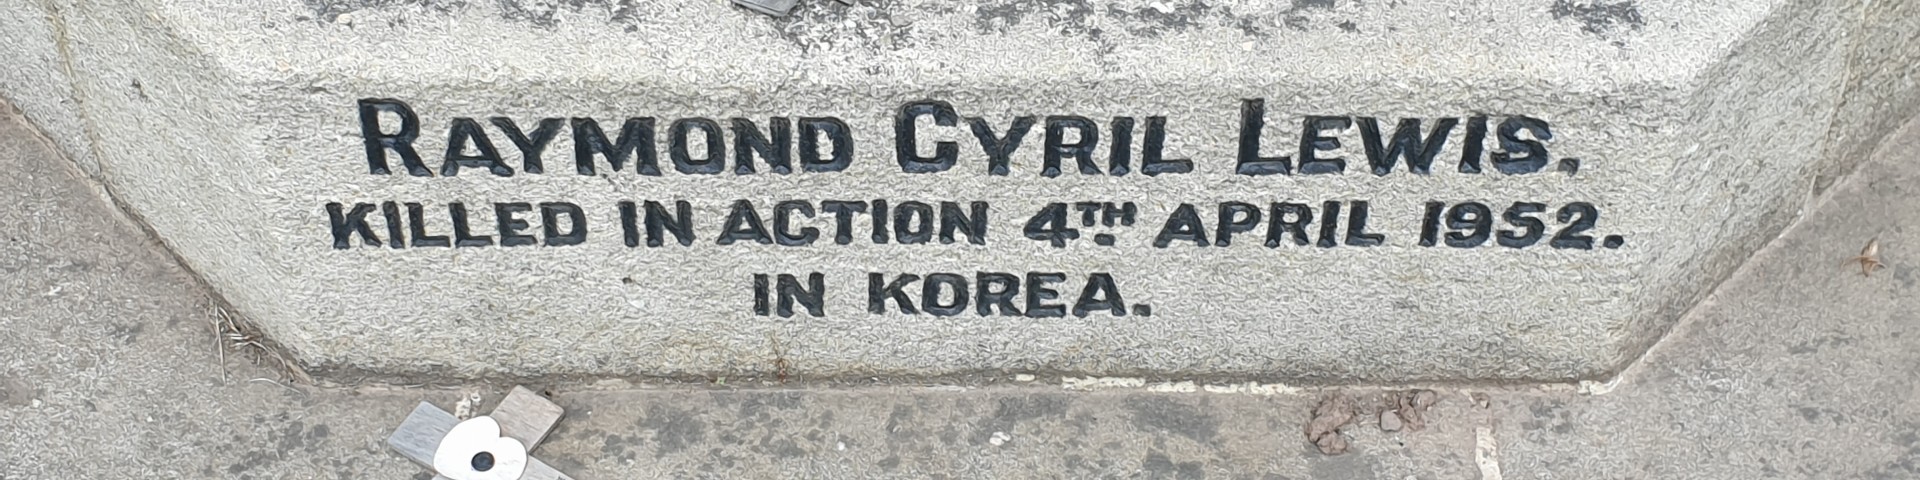 Korean War Casualty, Stretton Sugwas War Memorial